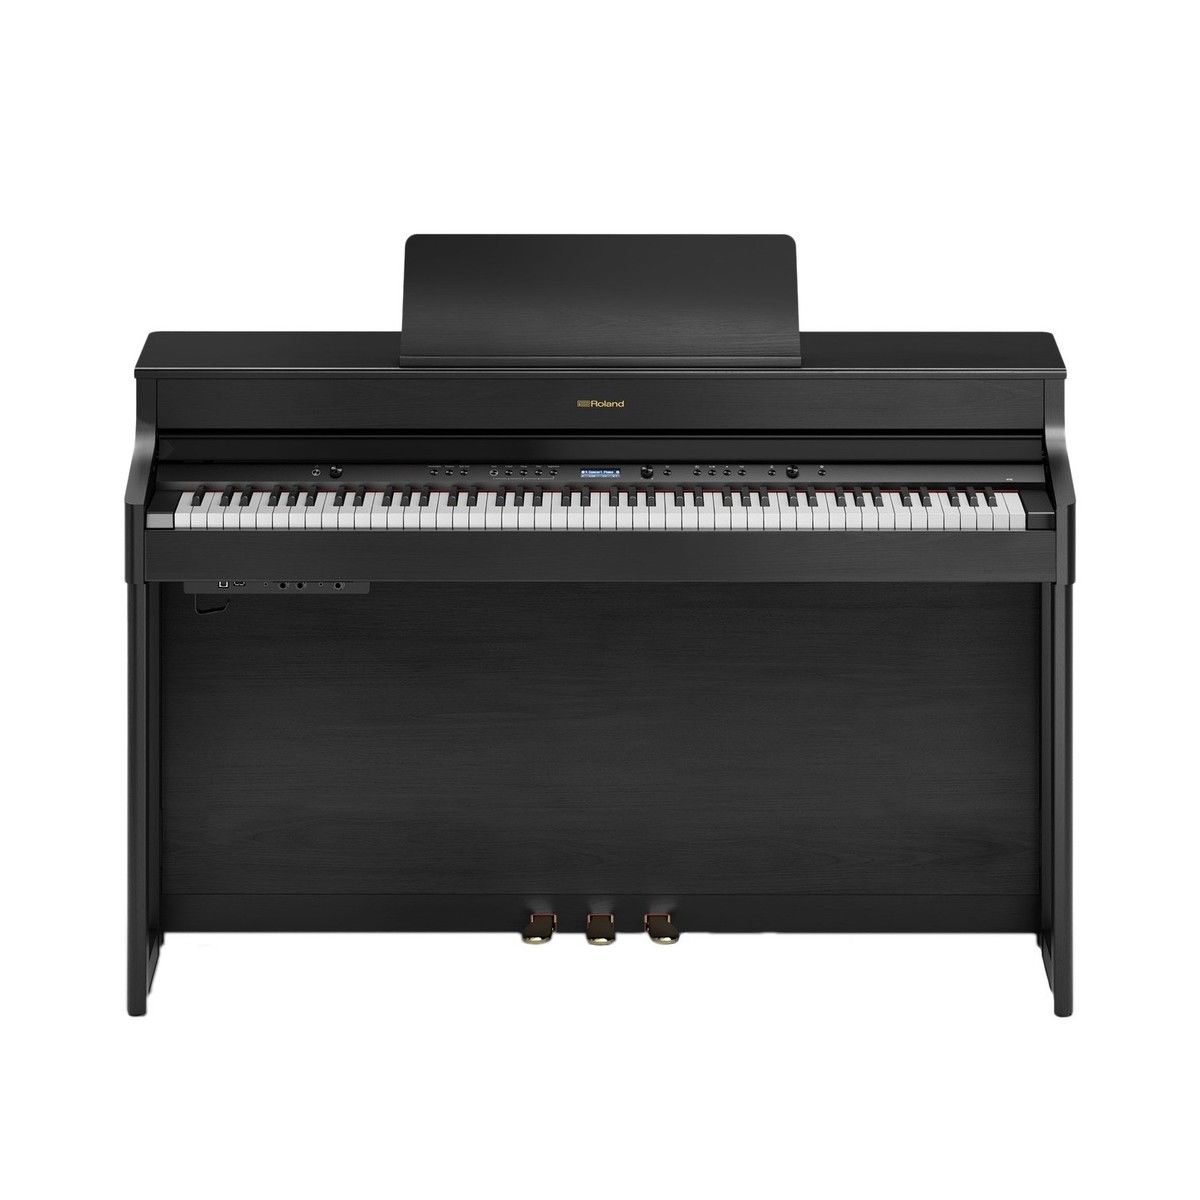 Цифровое пианино ROLAND HP702 CH SET